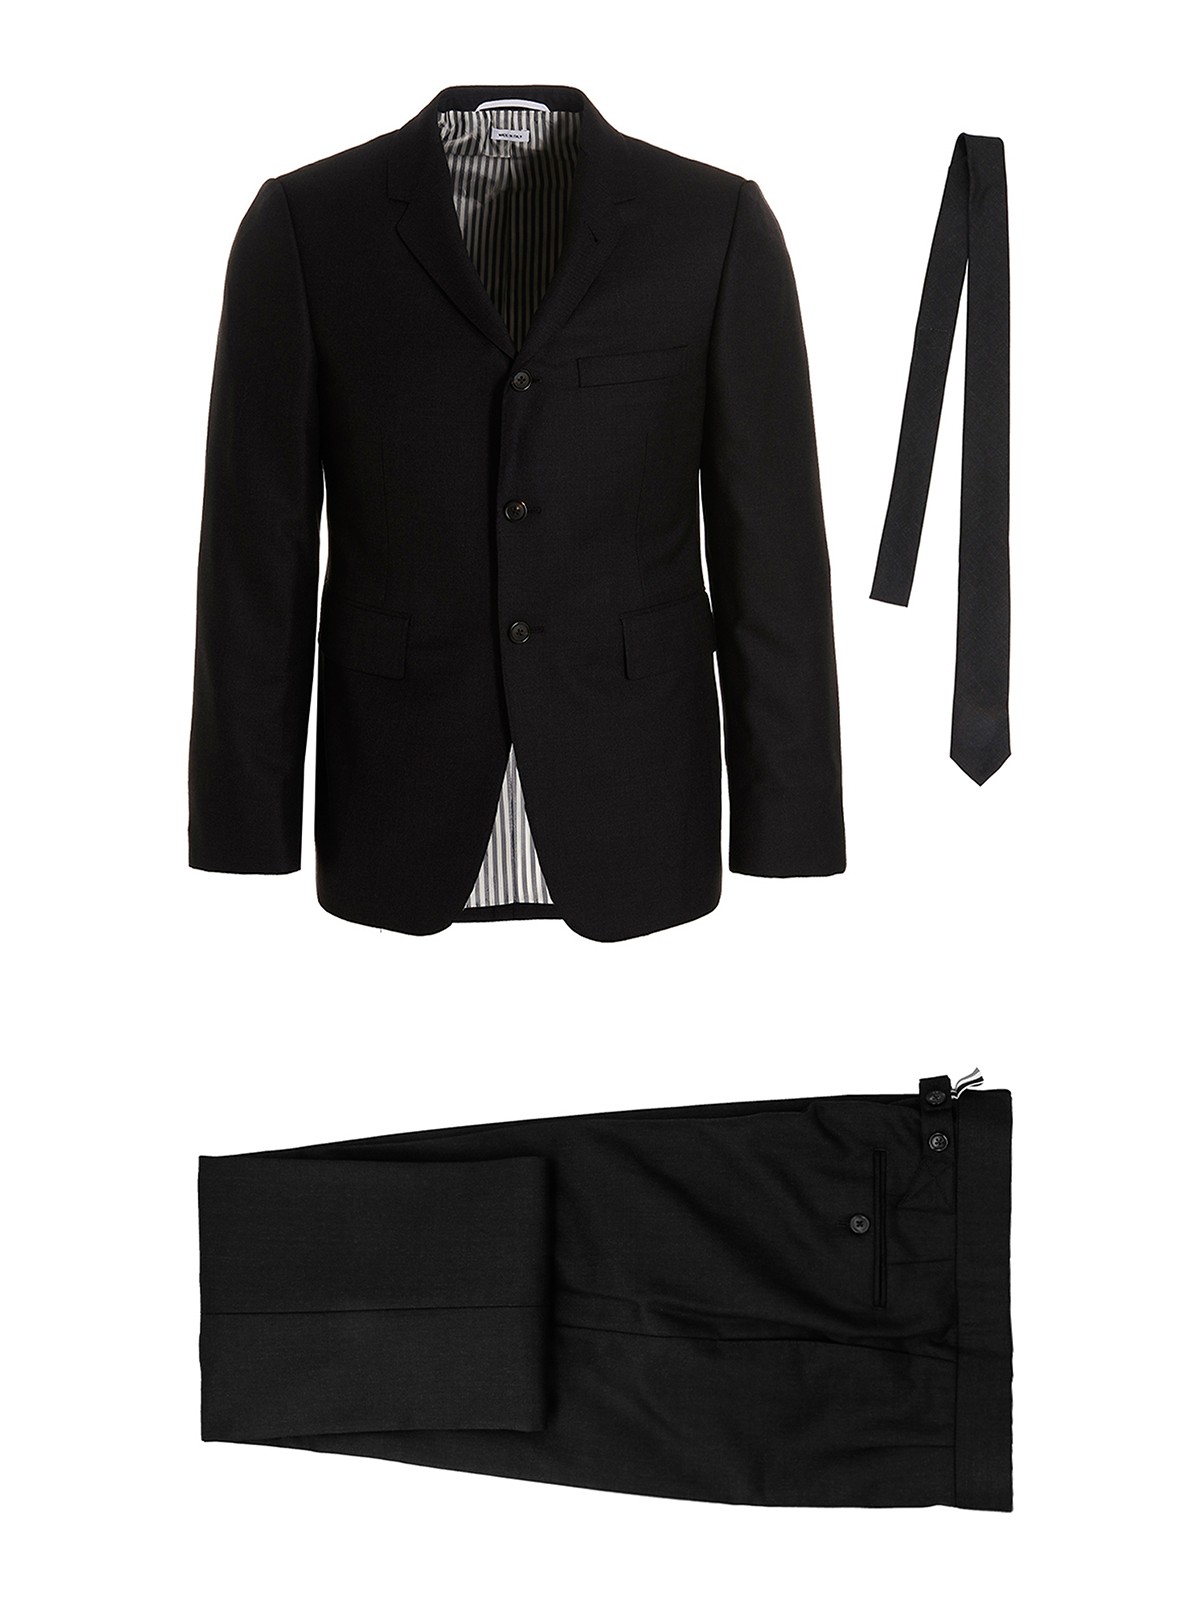 Thom Browne Classic Suit In Grey